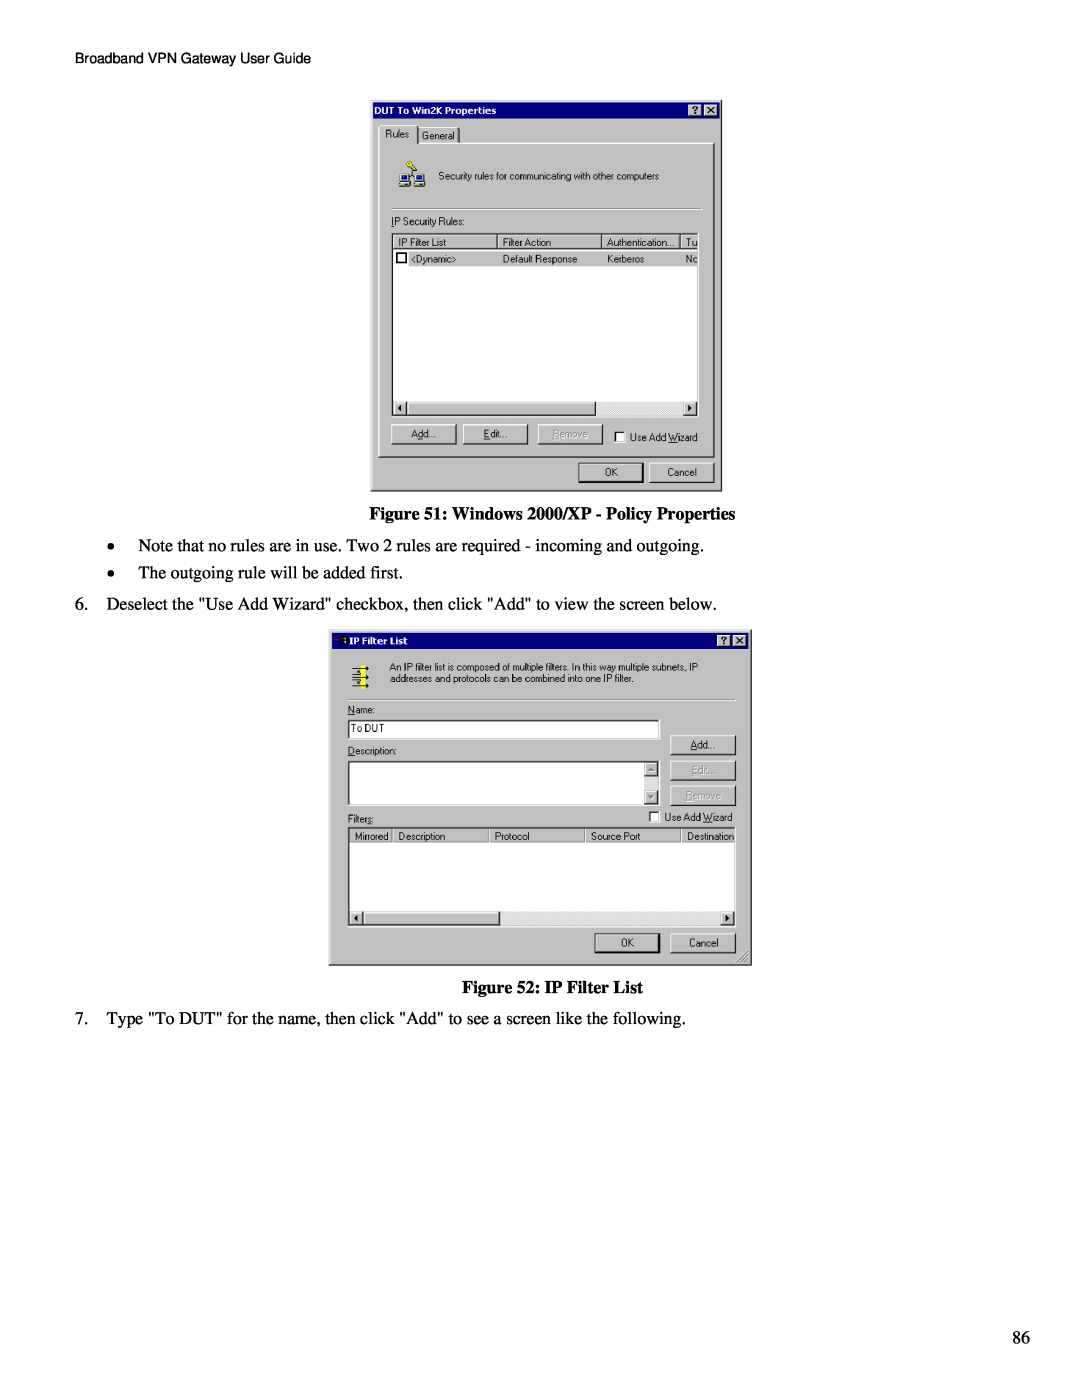 TRENDnet TW100-BRV324 manual Windows 2000/XP - Policy Properties, IP Filter List 